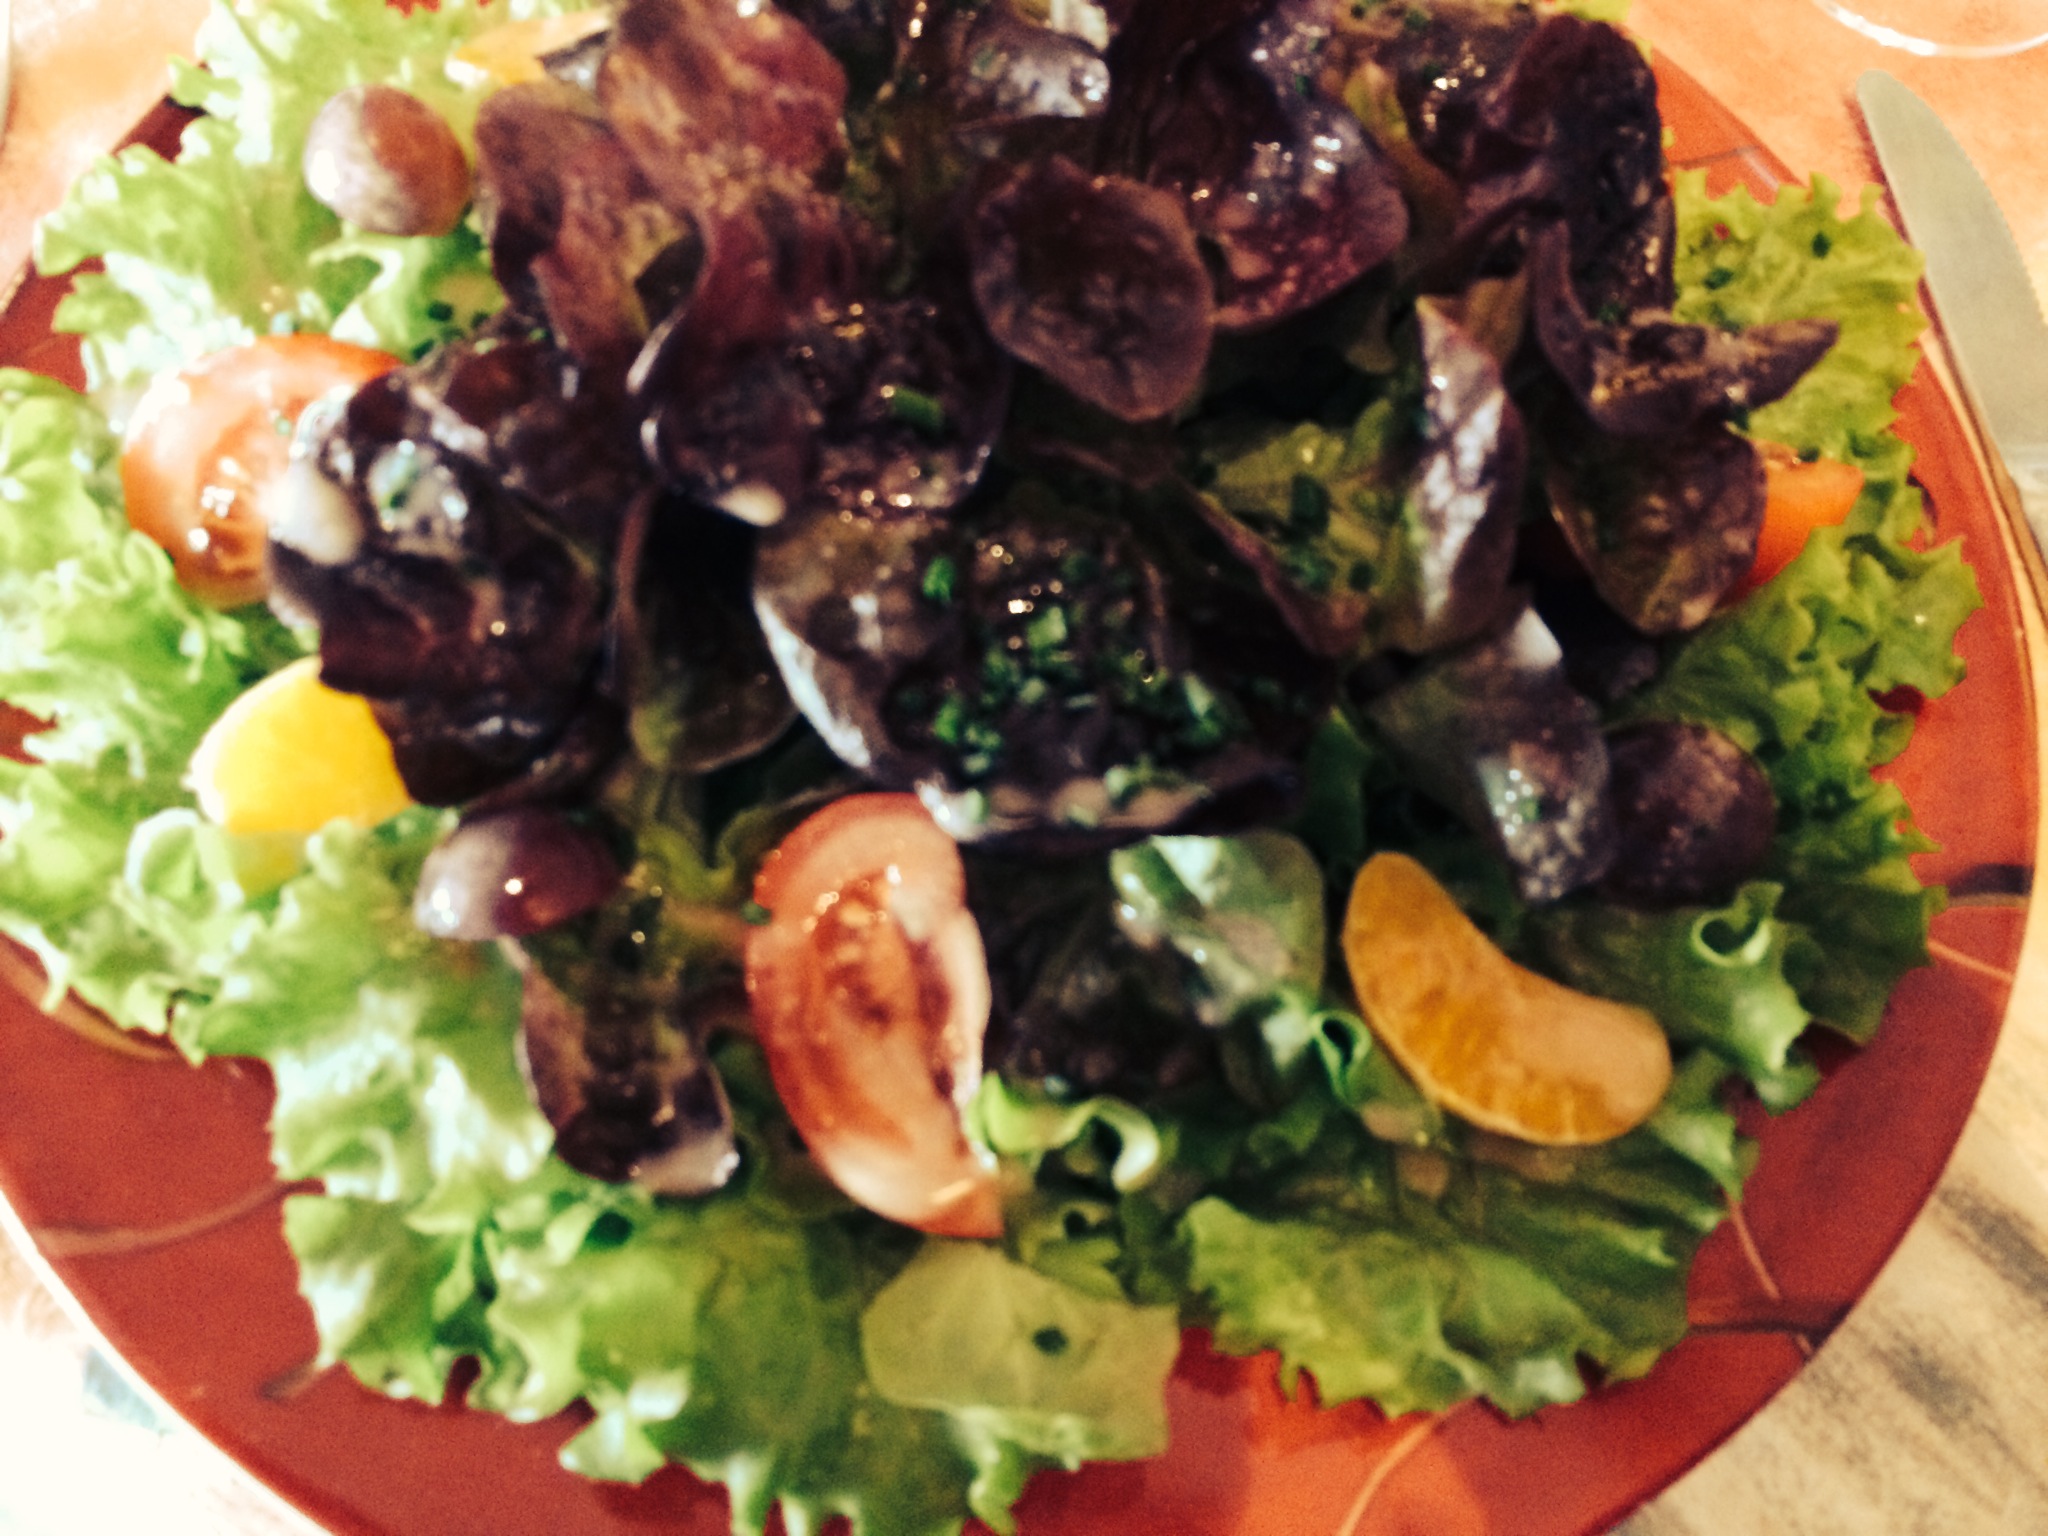 French Salad